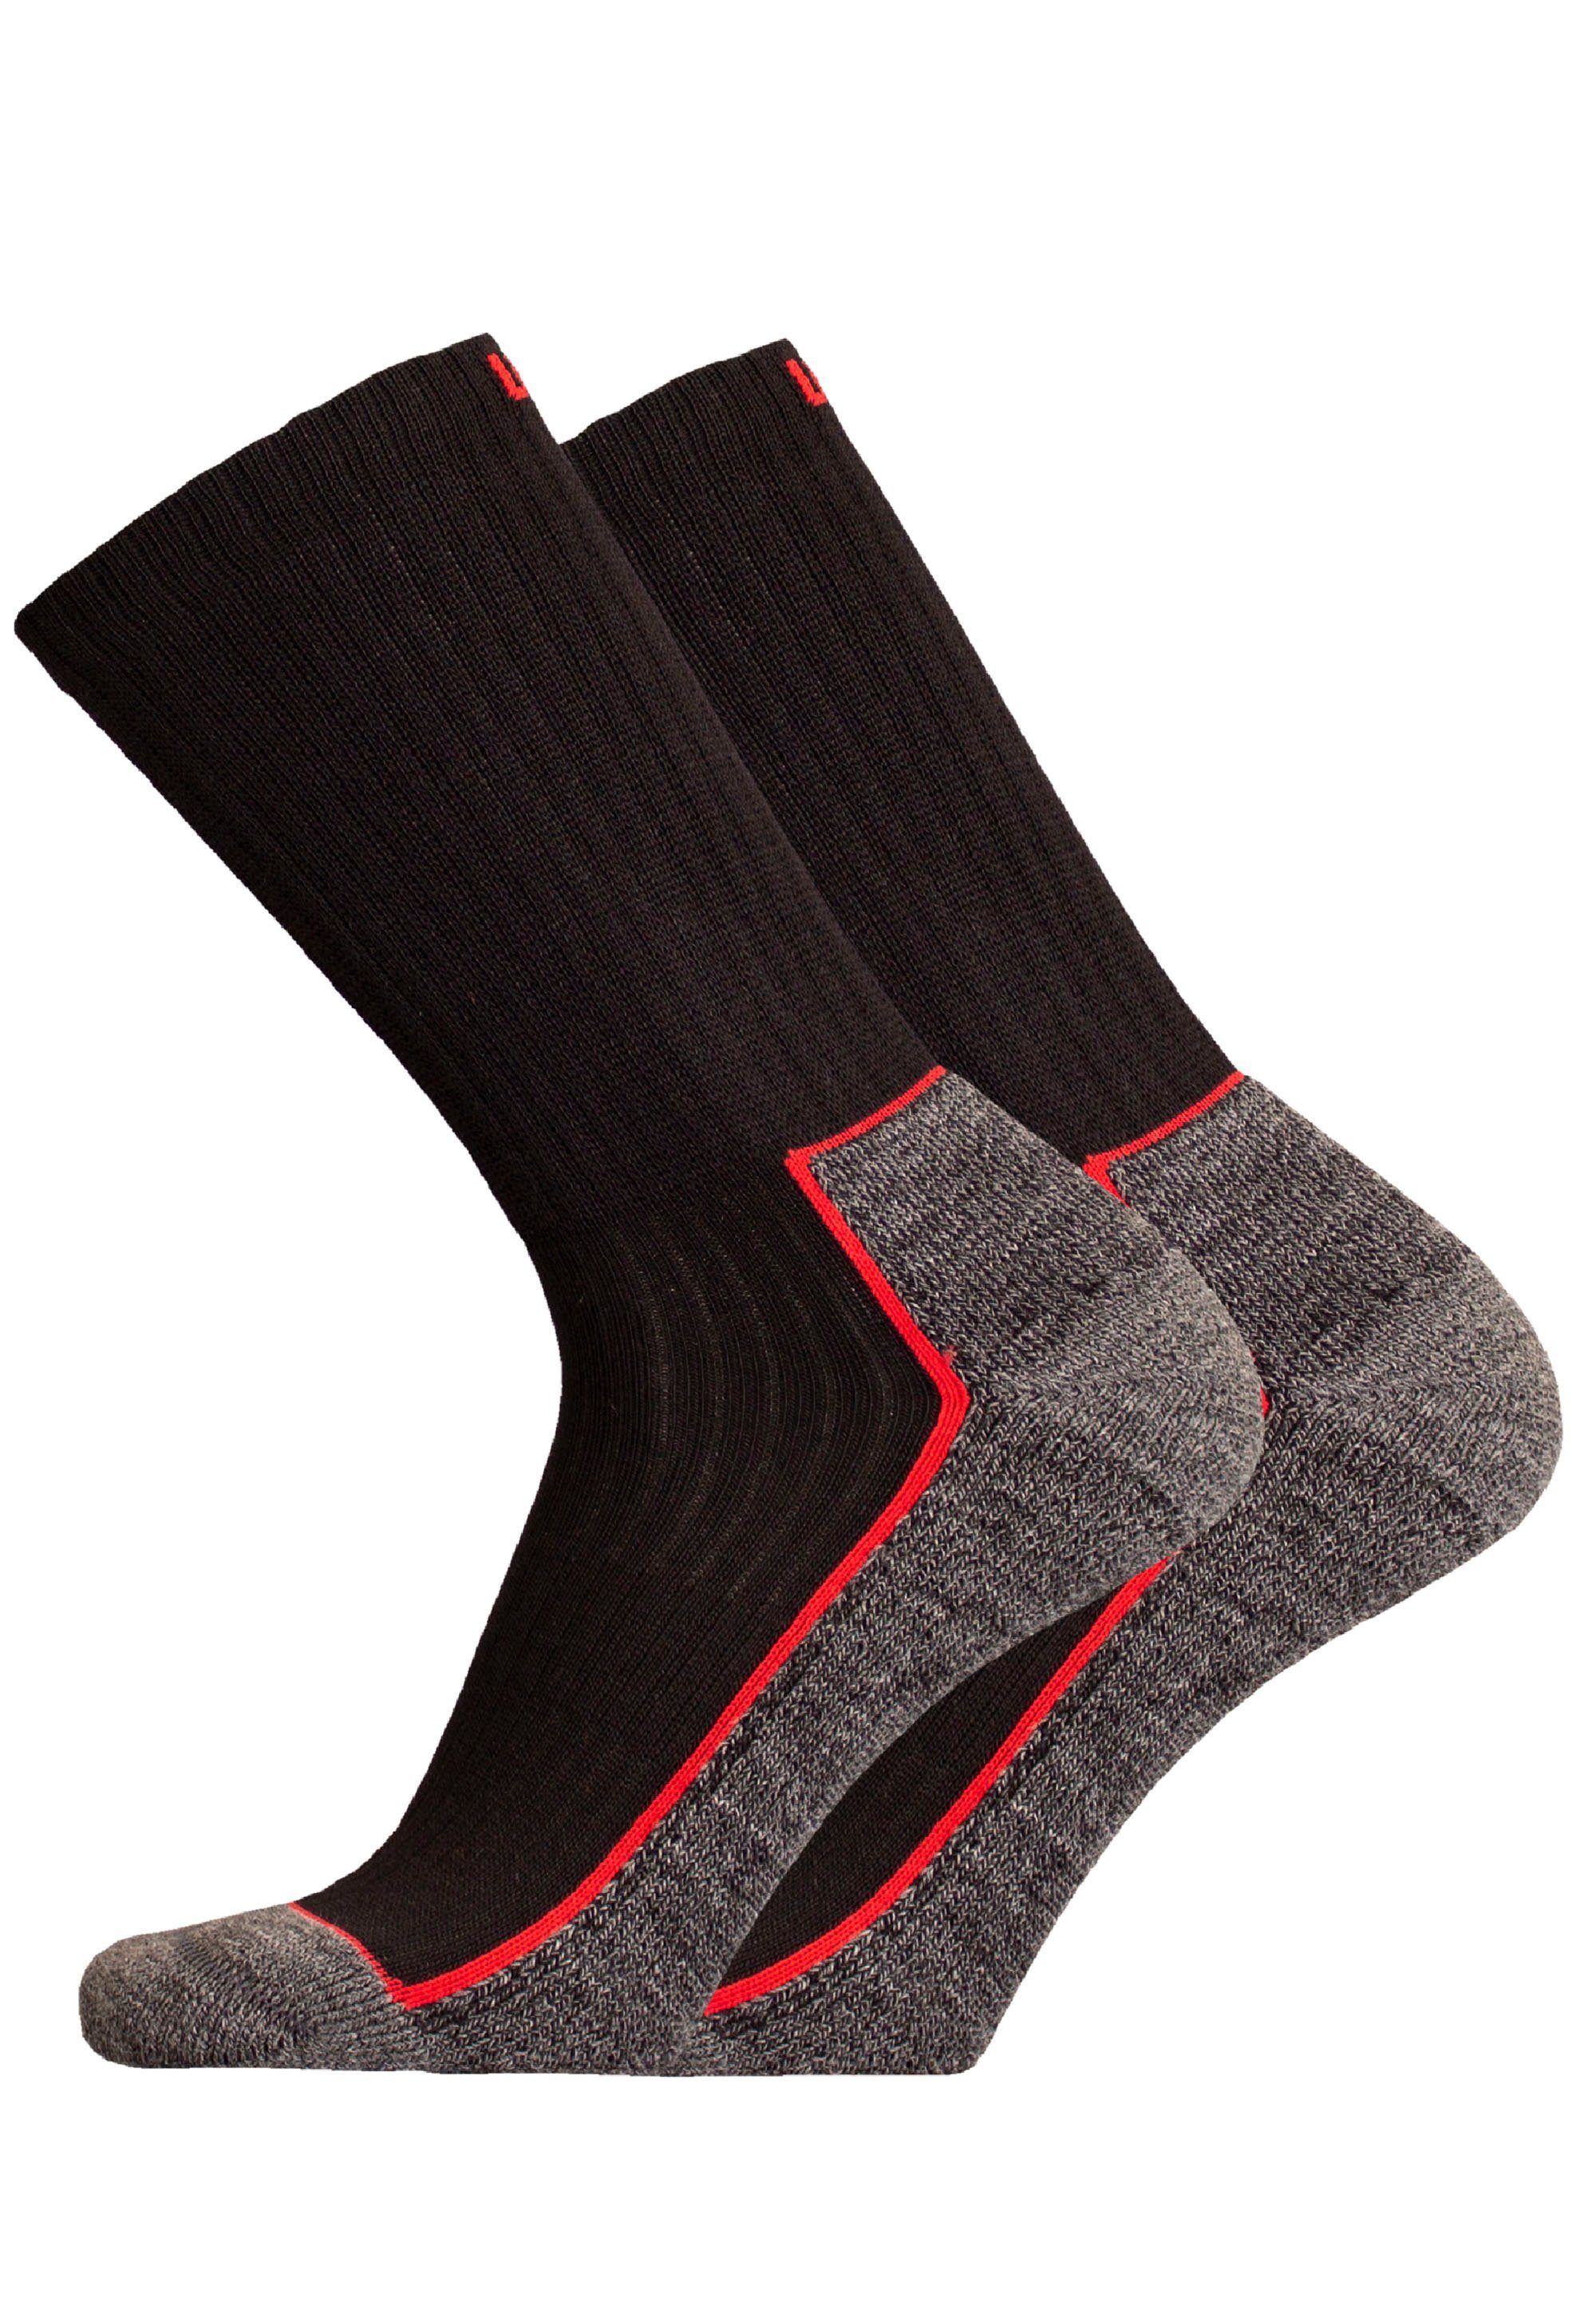 UphillSport Socken SAANA 2er Pack (2-Paar) mit speziell geformter Ferse schwarz | Wandersocken